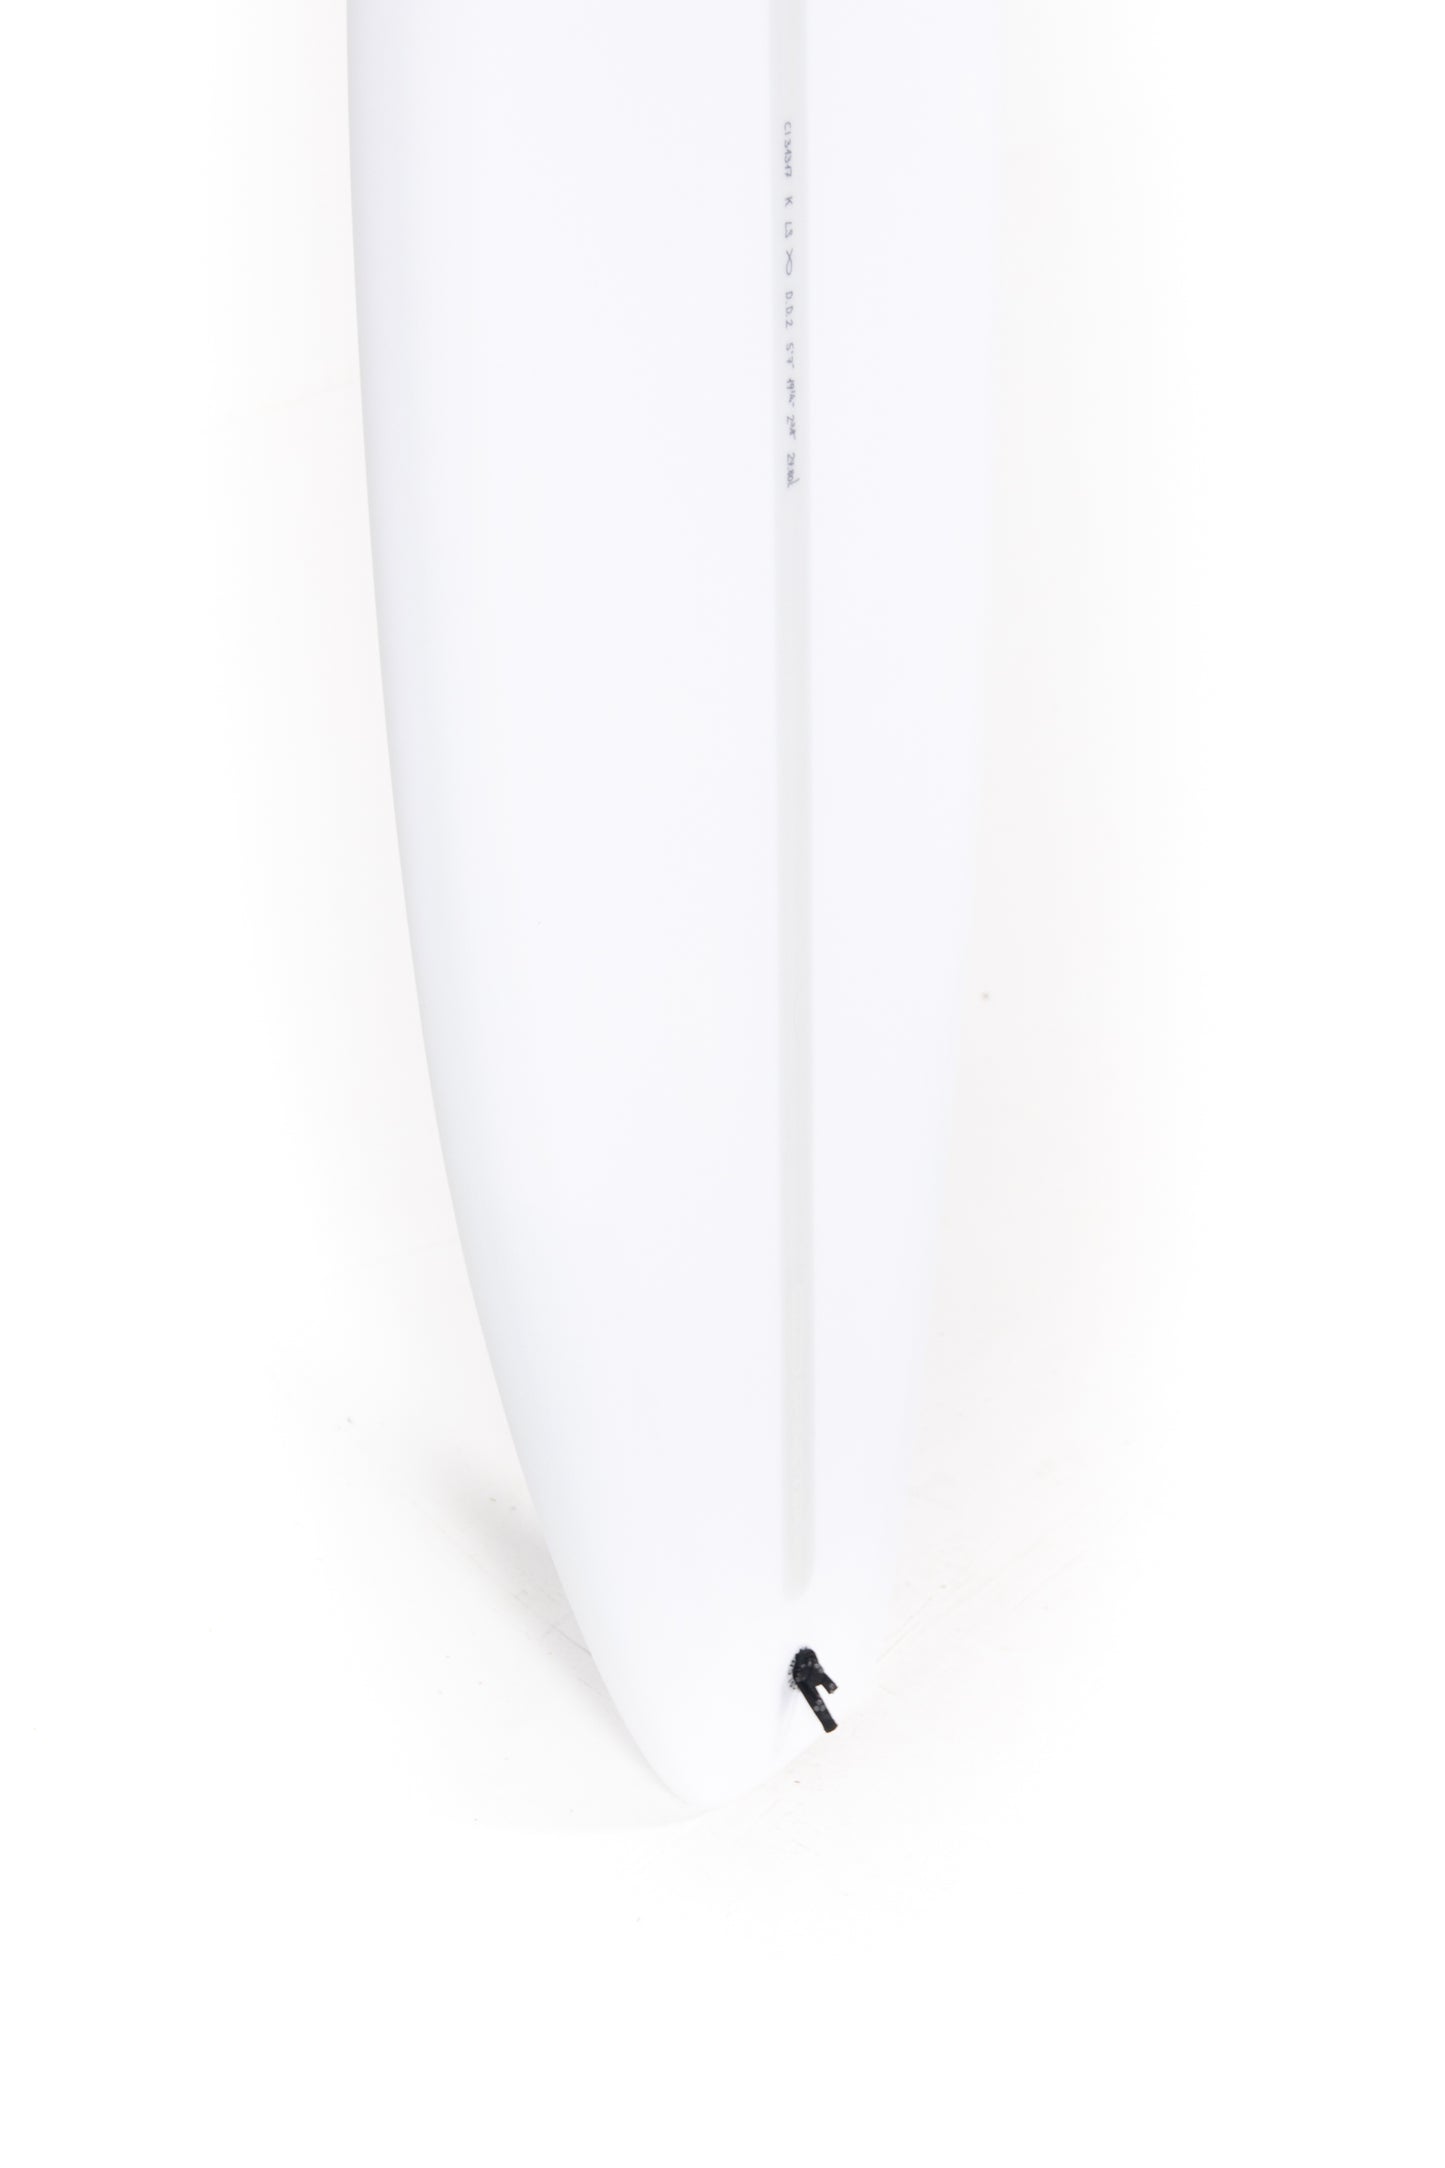 
                  
                    Pukas Surf Shop - Channel Islands - DUMPSTER DIVER 2 Spine Tek by Britt Merrick -  5'7" x 19 1/4 x 2 3/8 - 27,80L - CI31317
                  
                